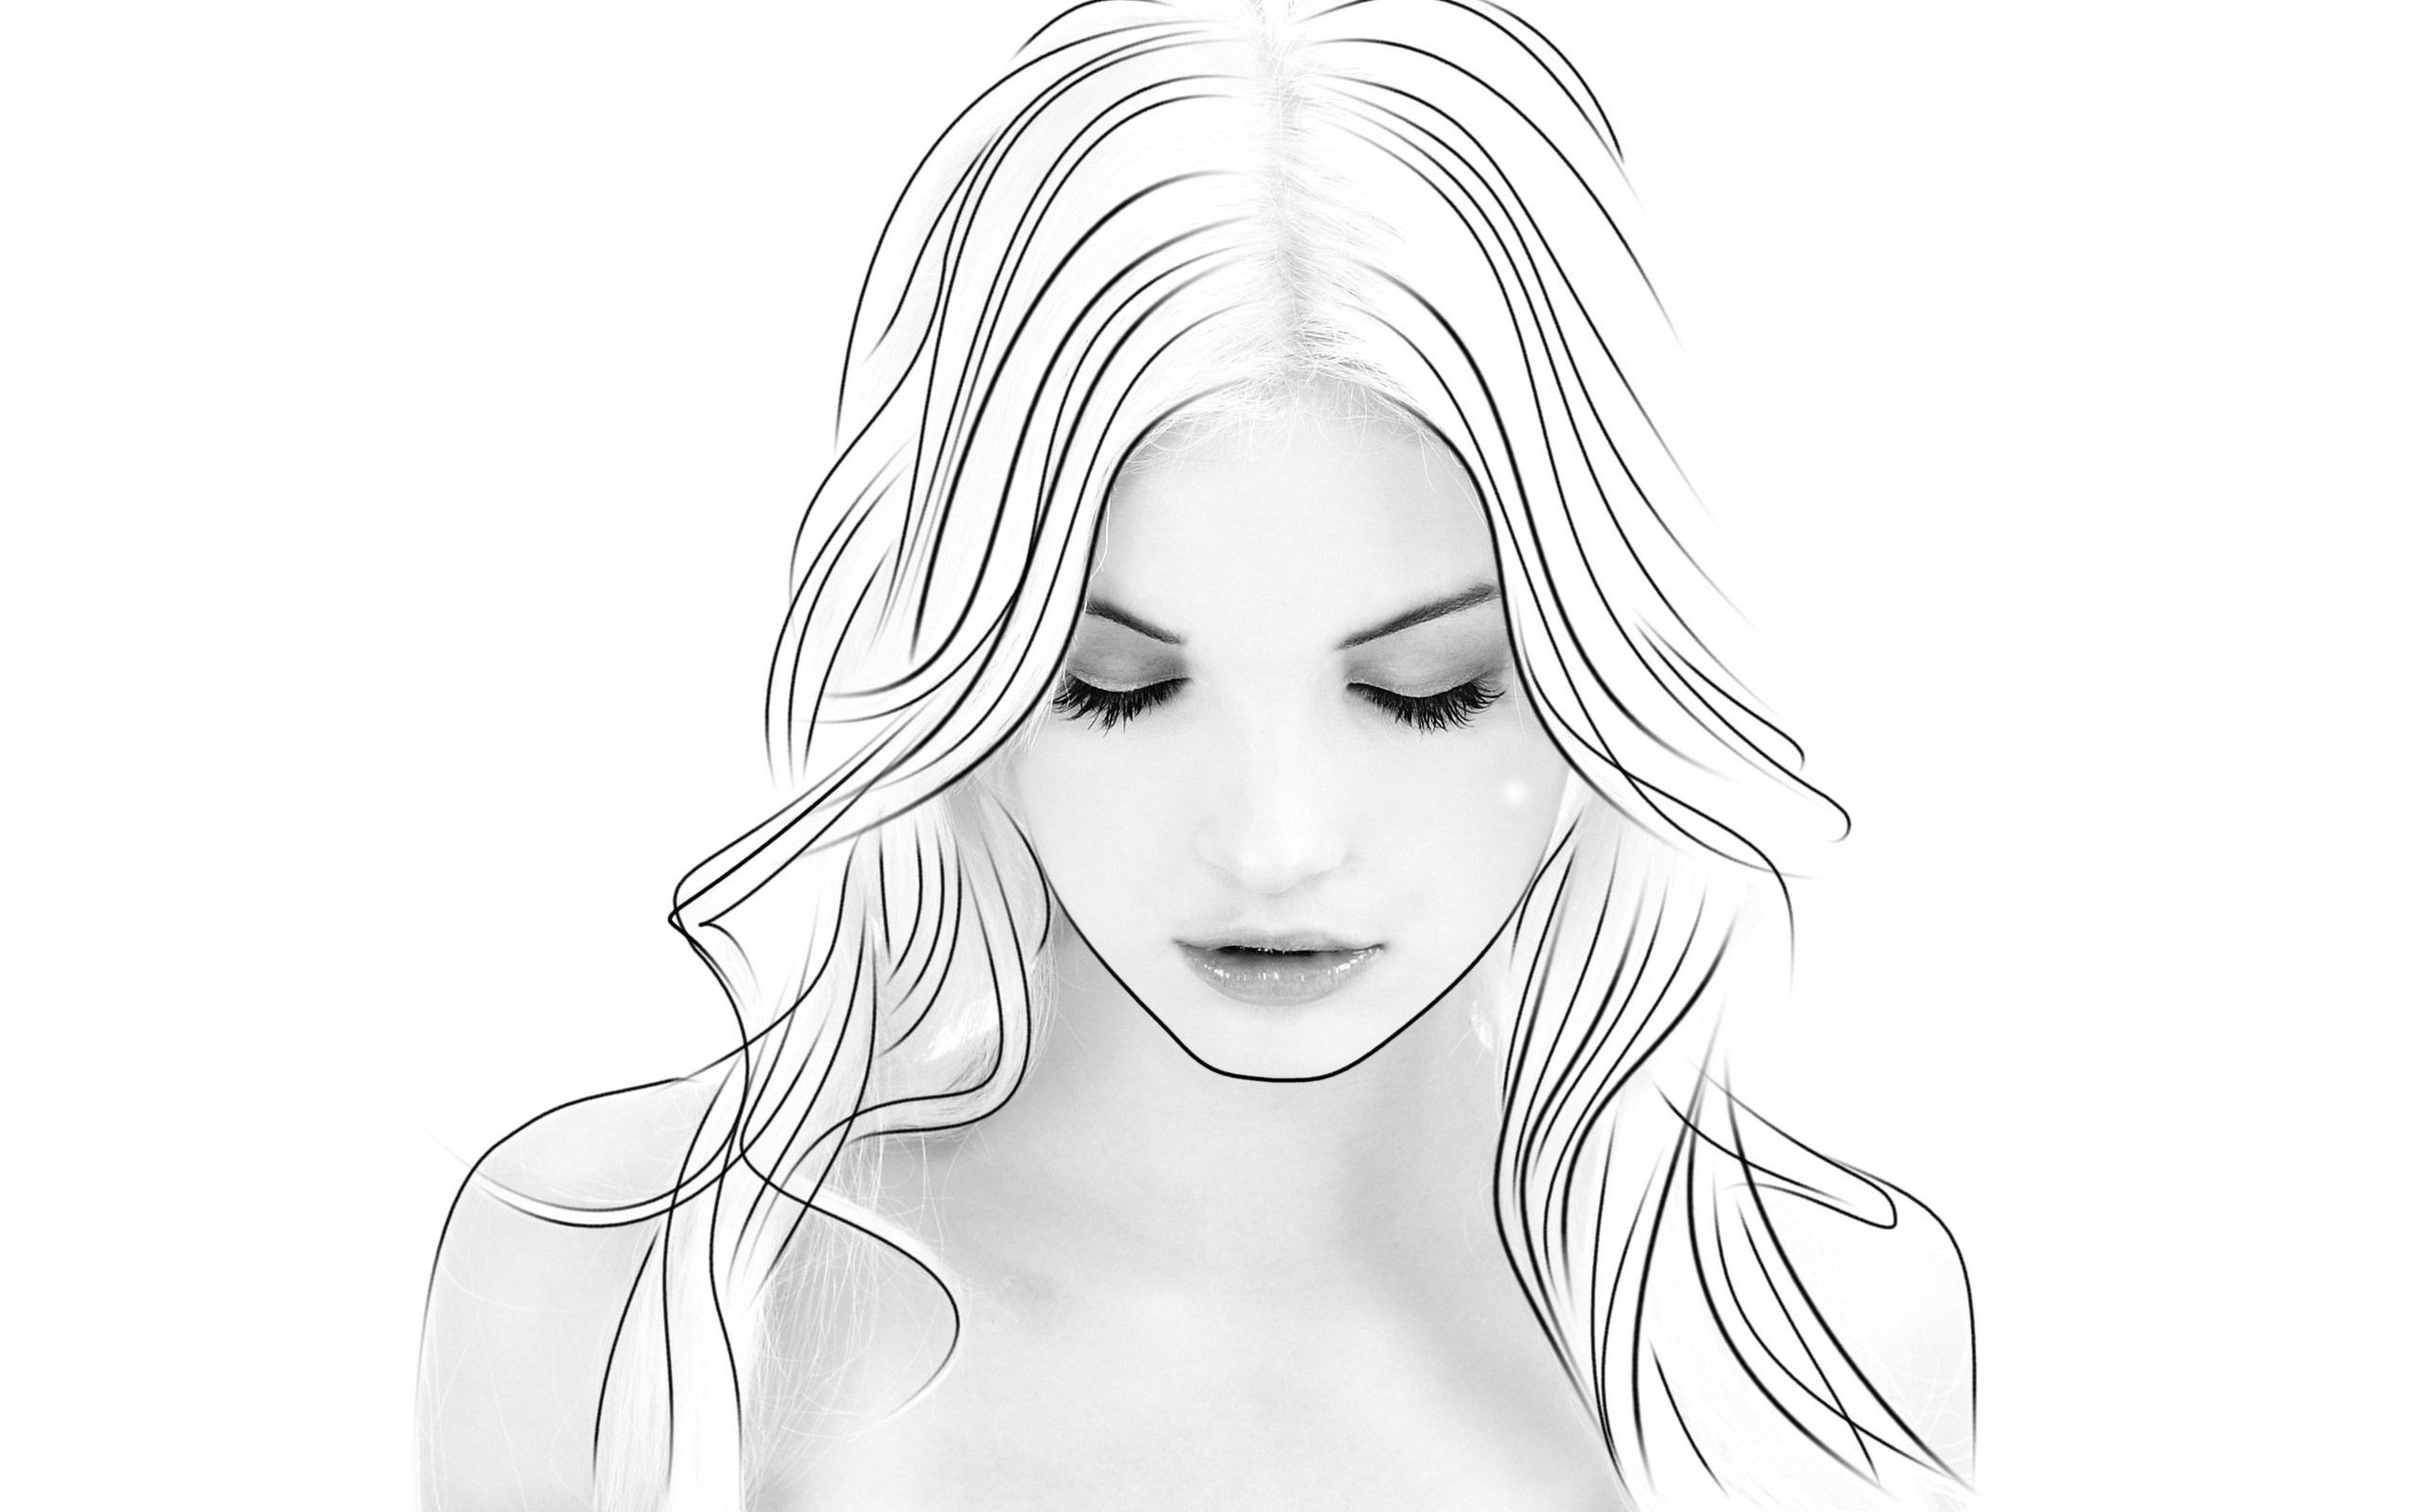 General 2560x1600 photo manipulation women face long hair portrait white background simple background artwork